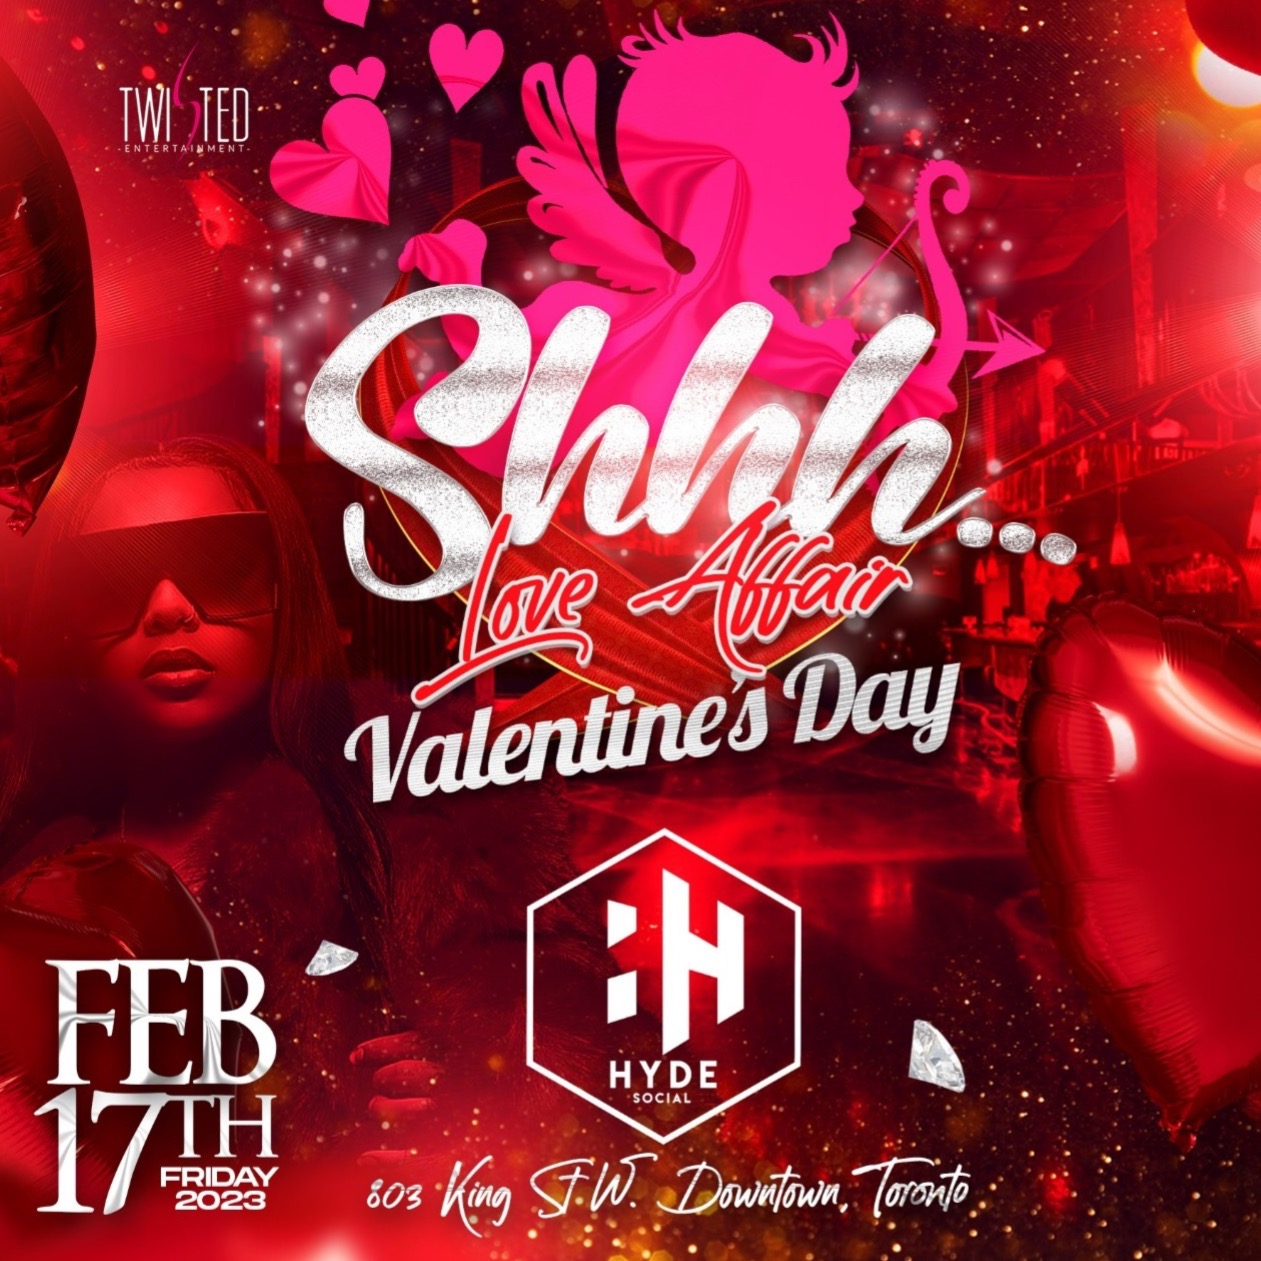 Shhh...Love Affair | Friday Feb 17 | Valentines Day inside Hyde Social